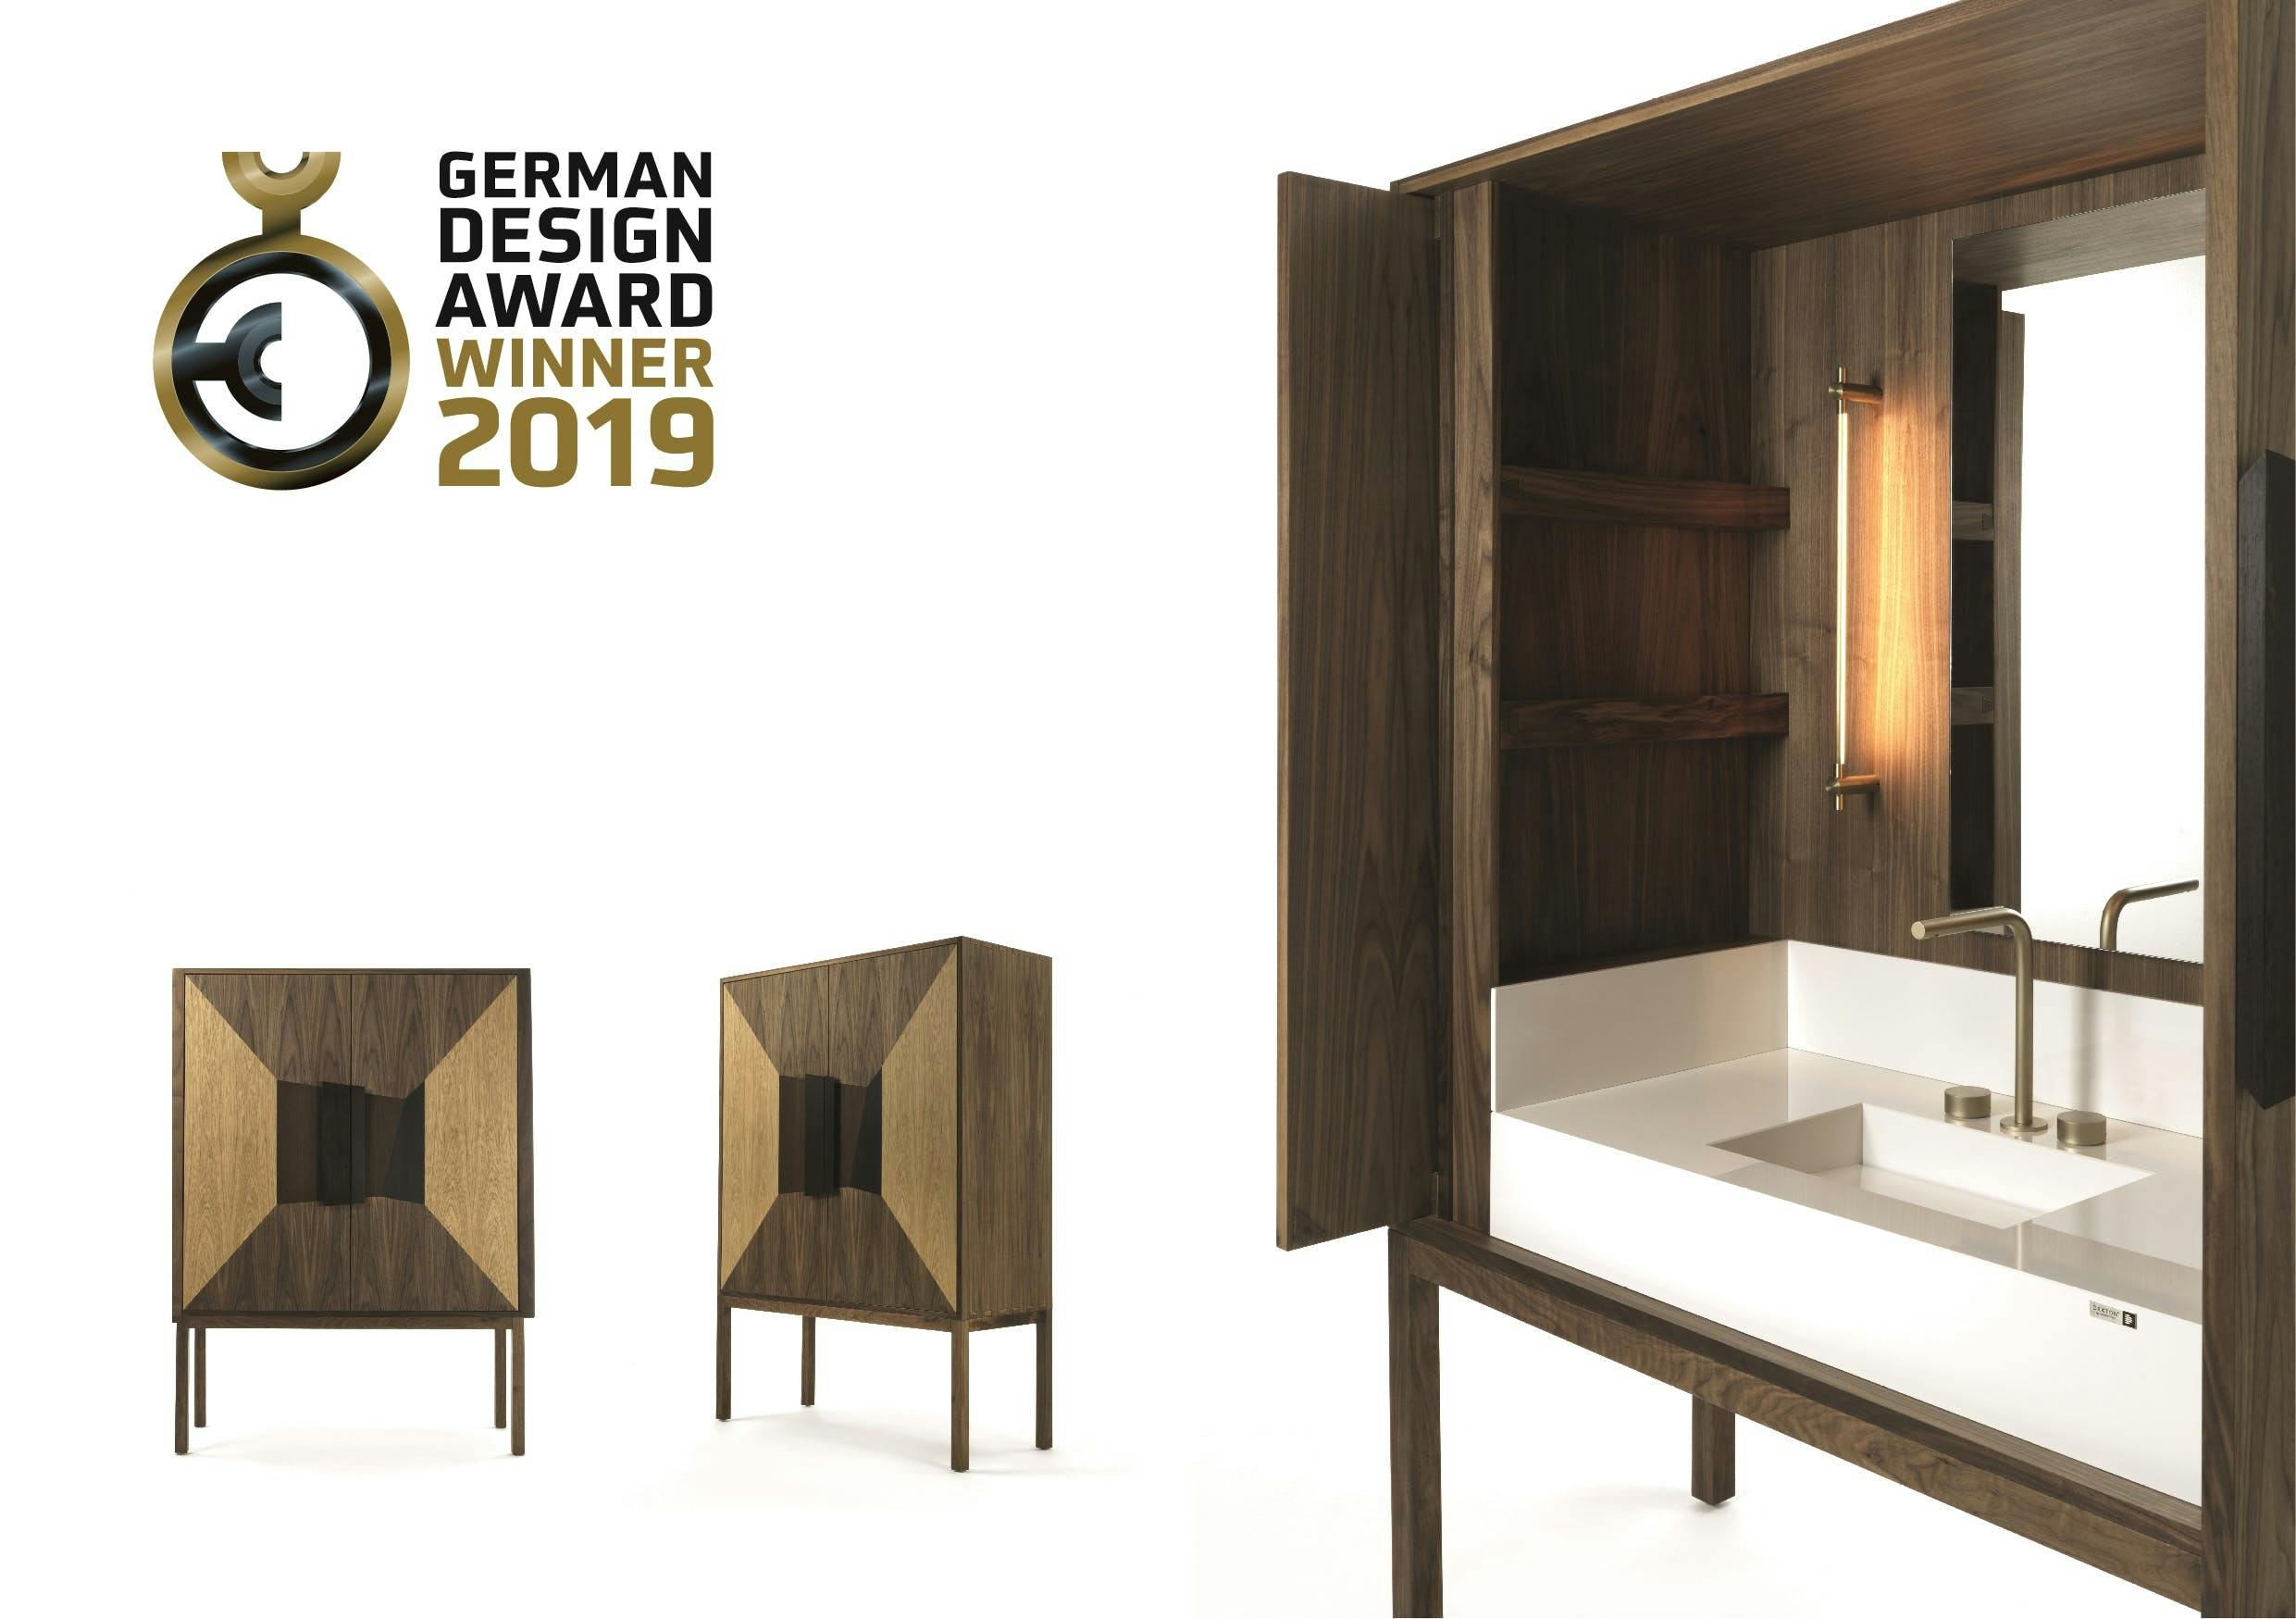 Image 33 of Dekauri German Design Award 2019 1 in DeKauri, German Design Award 2019 - Cosentino